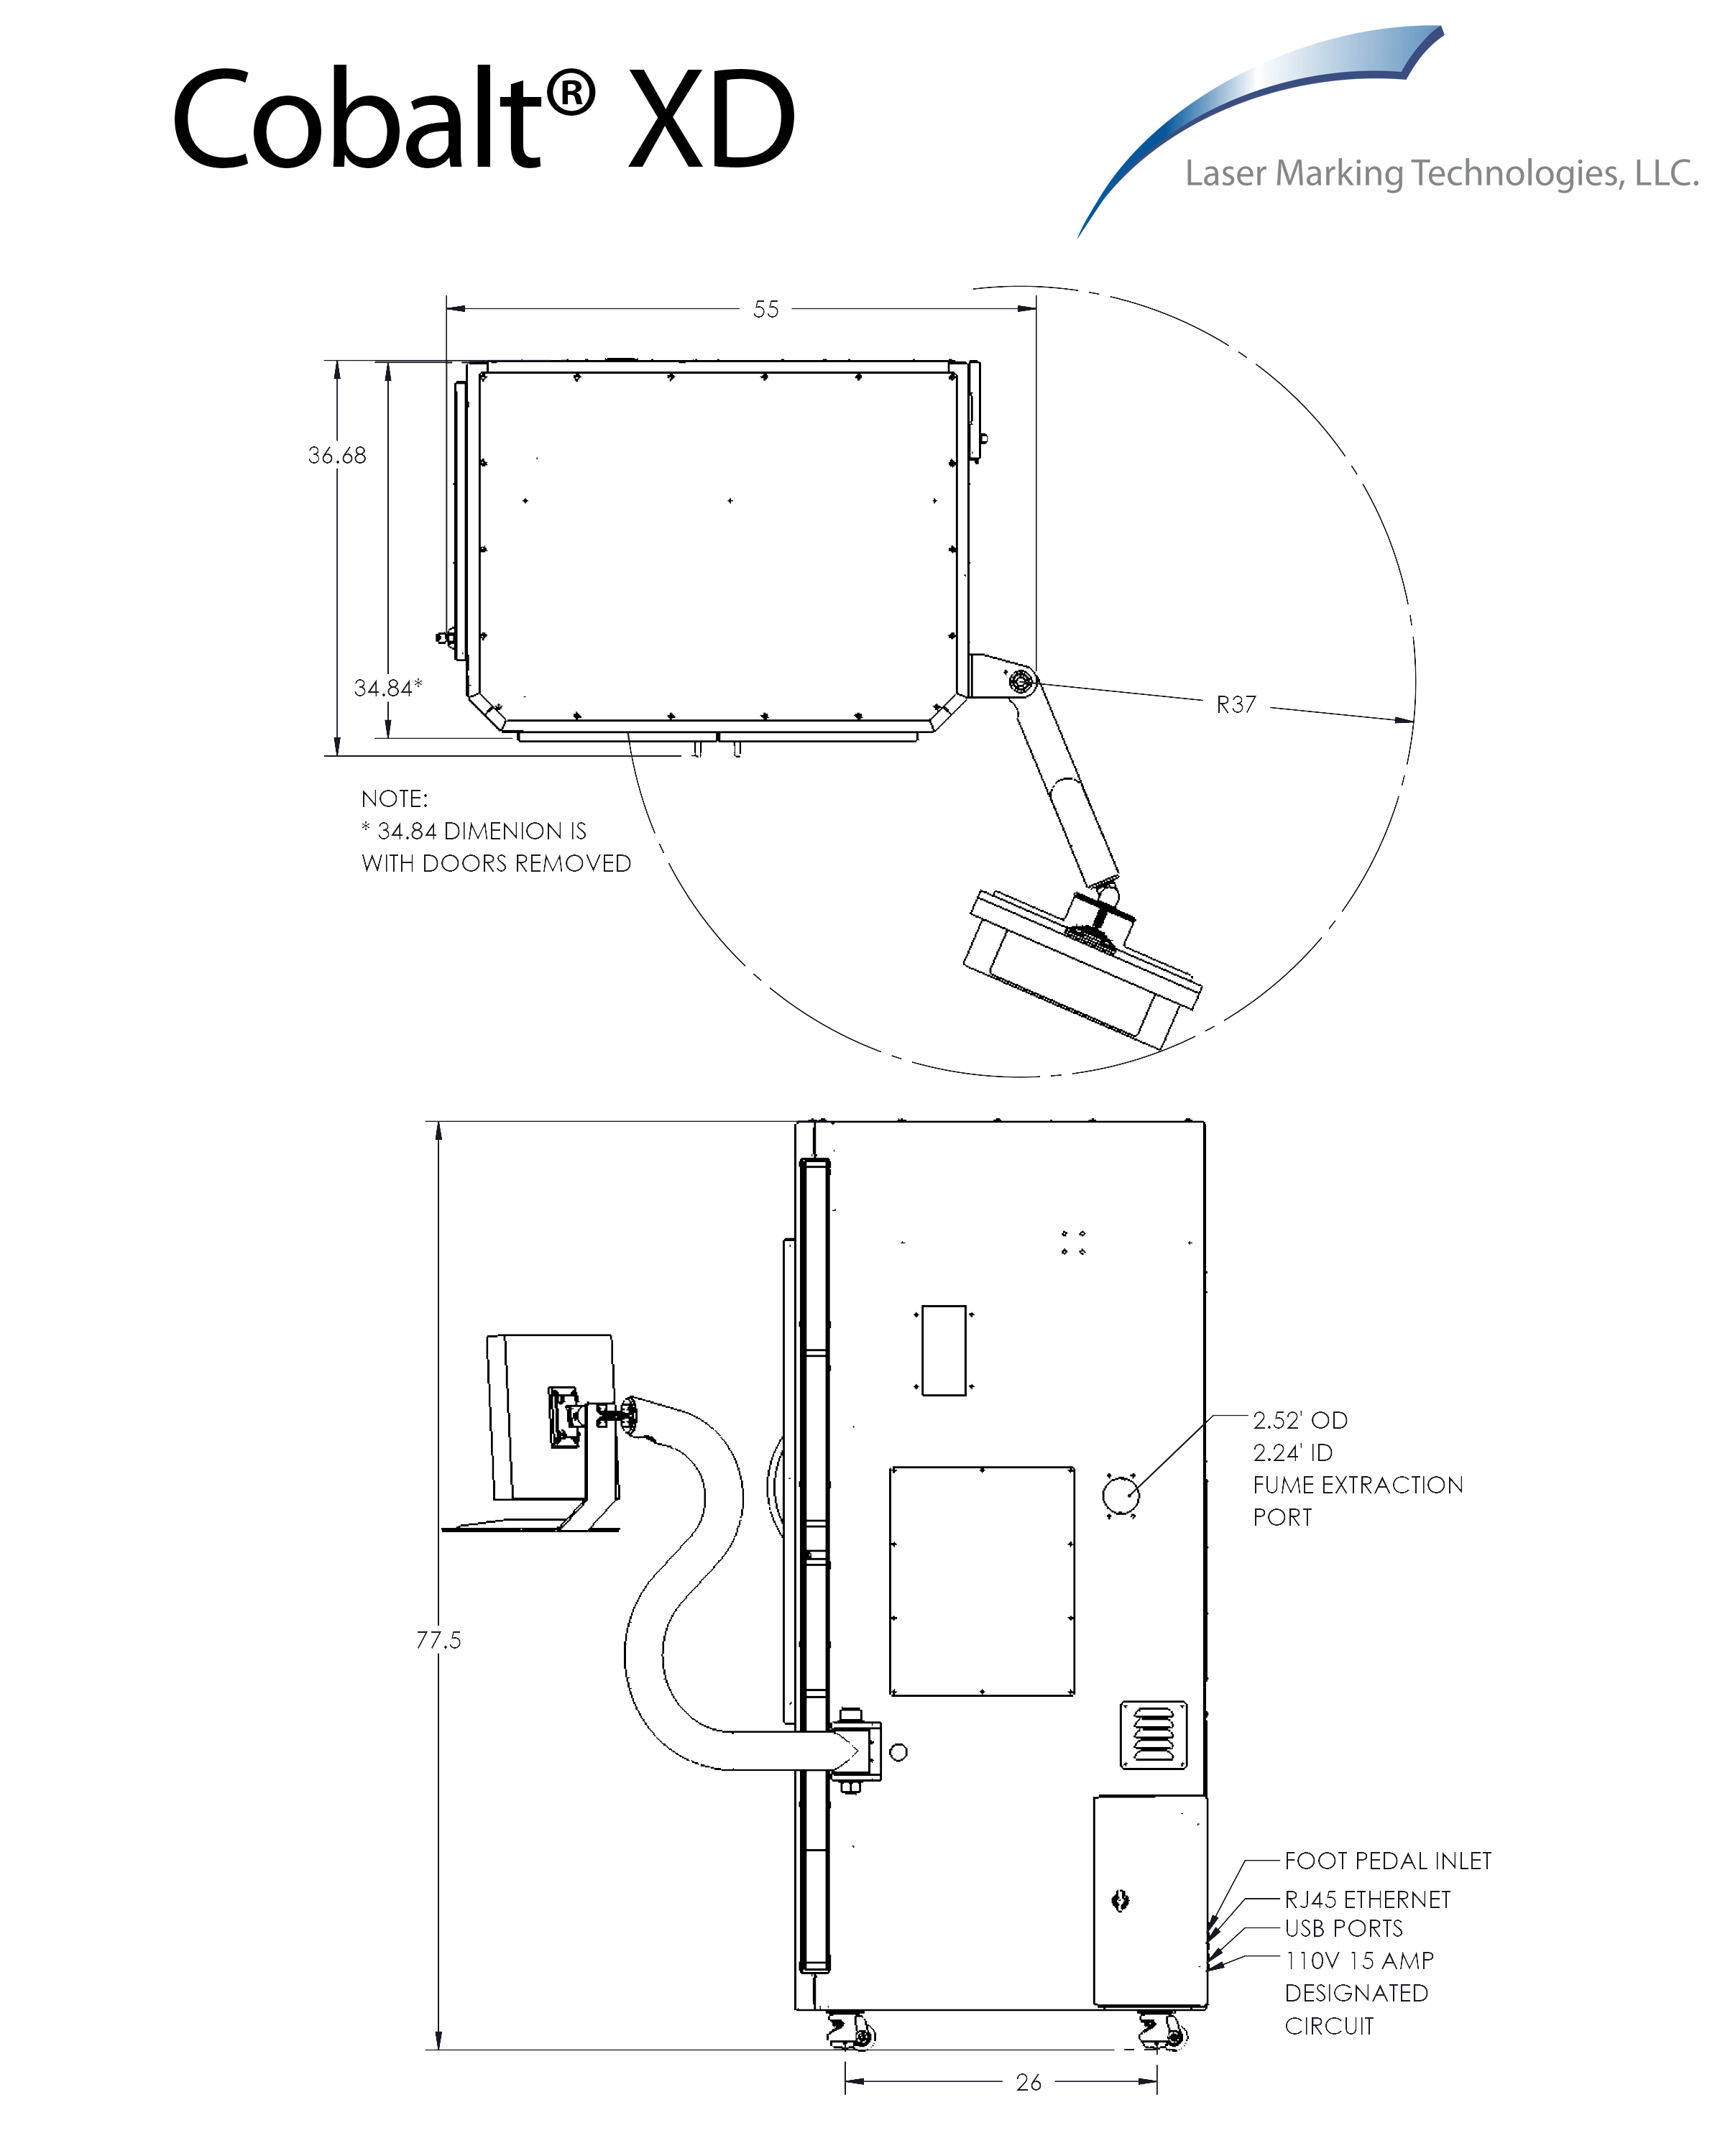 Cobalt XD laser marking machine layout and diagram